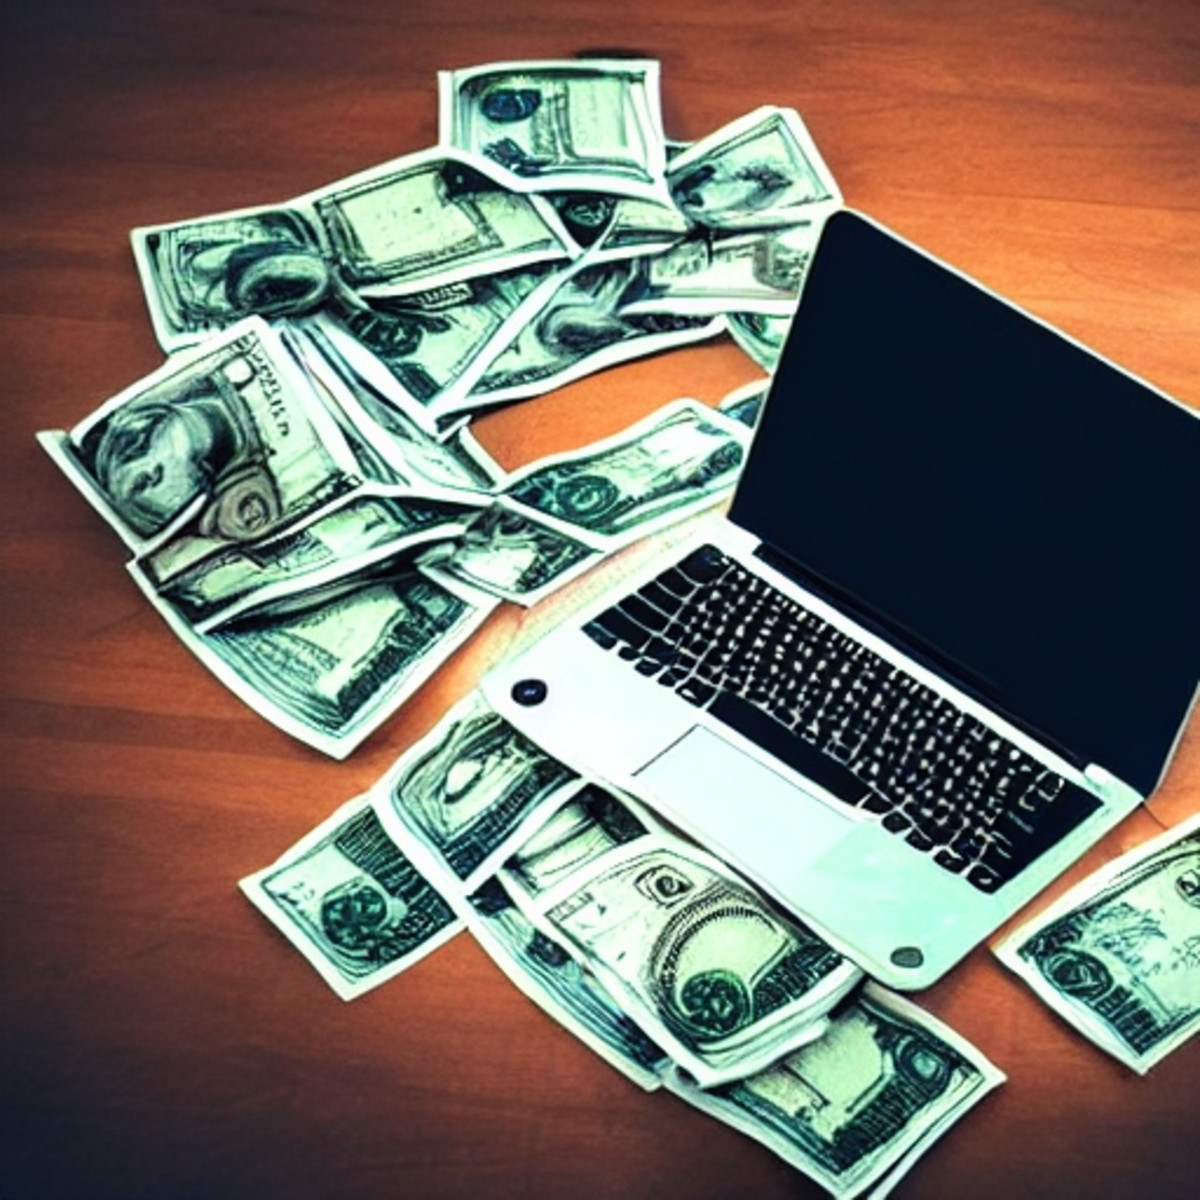 Online Hustle: Making Money on the Internet